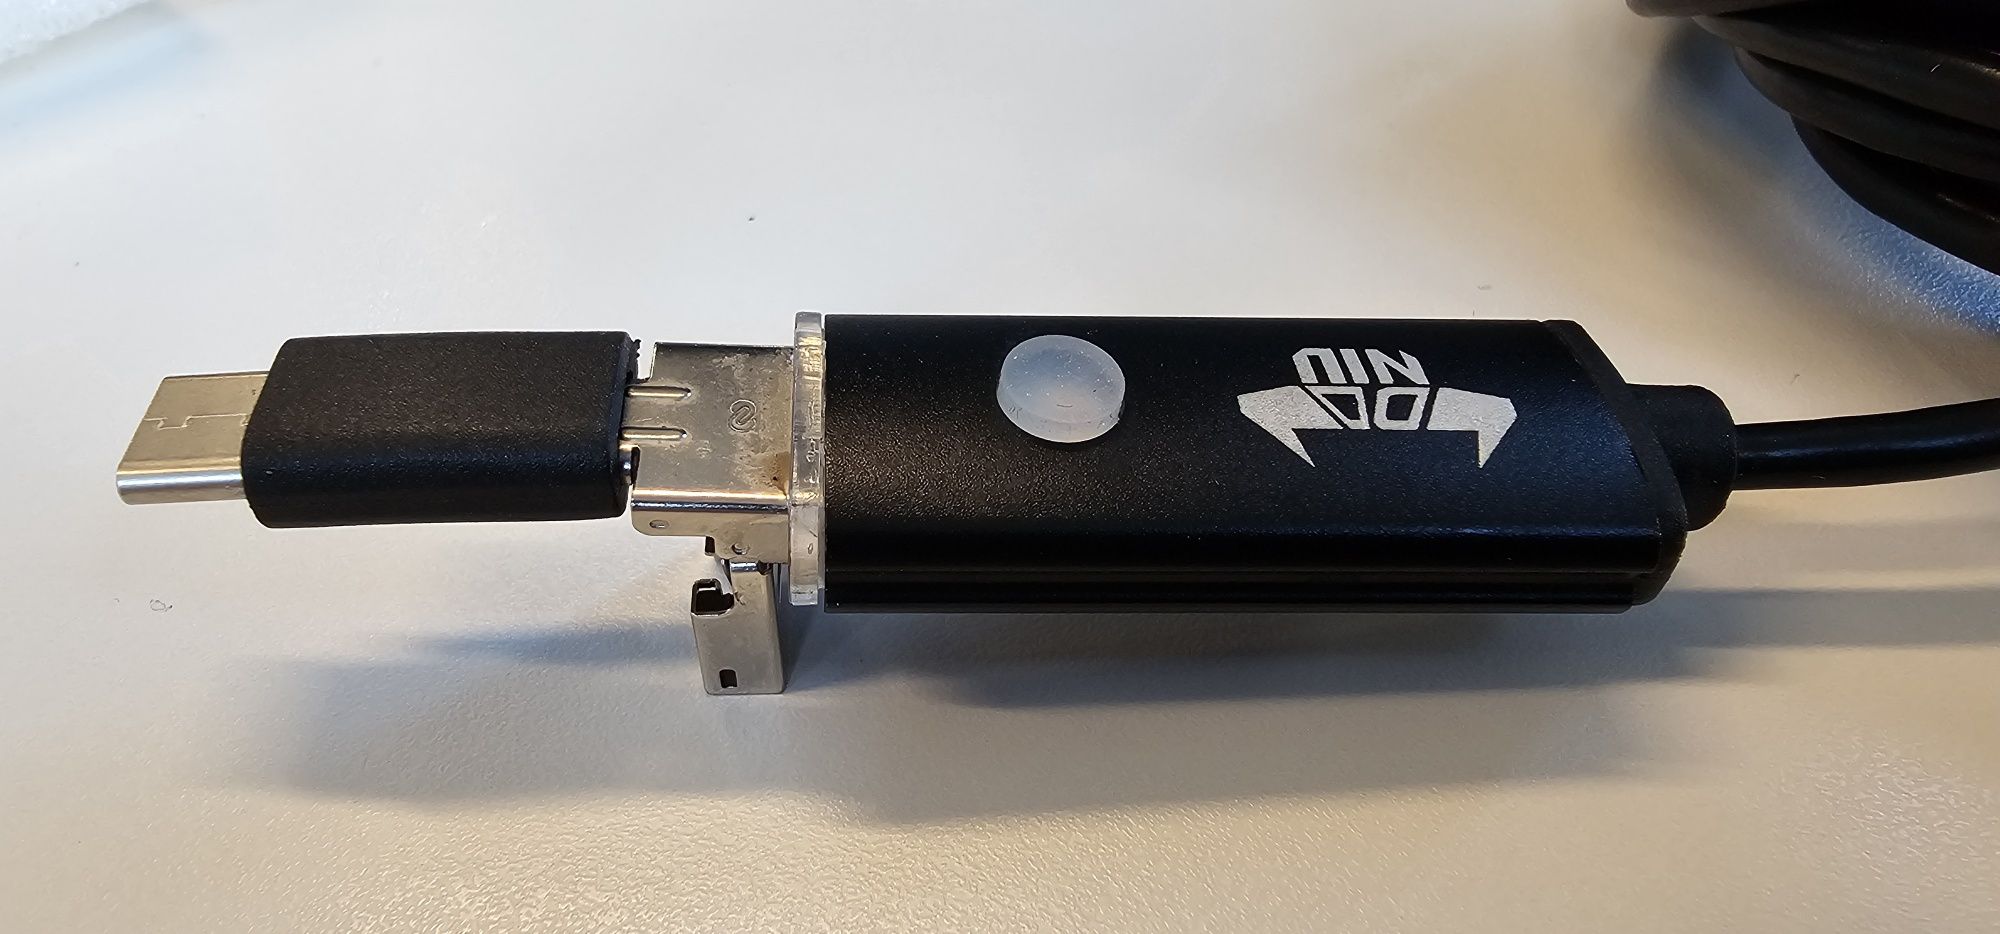 Endoscop waterproof USB 7mm 6 LED inspectie conducte